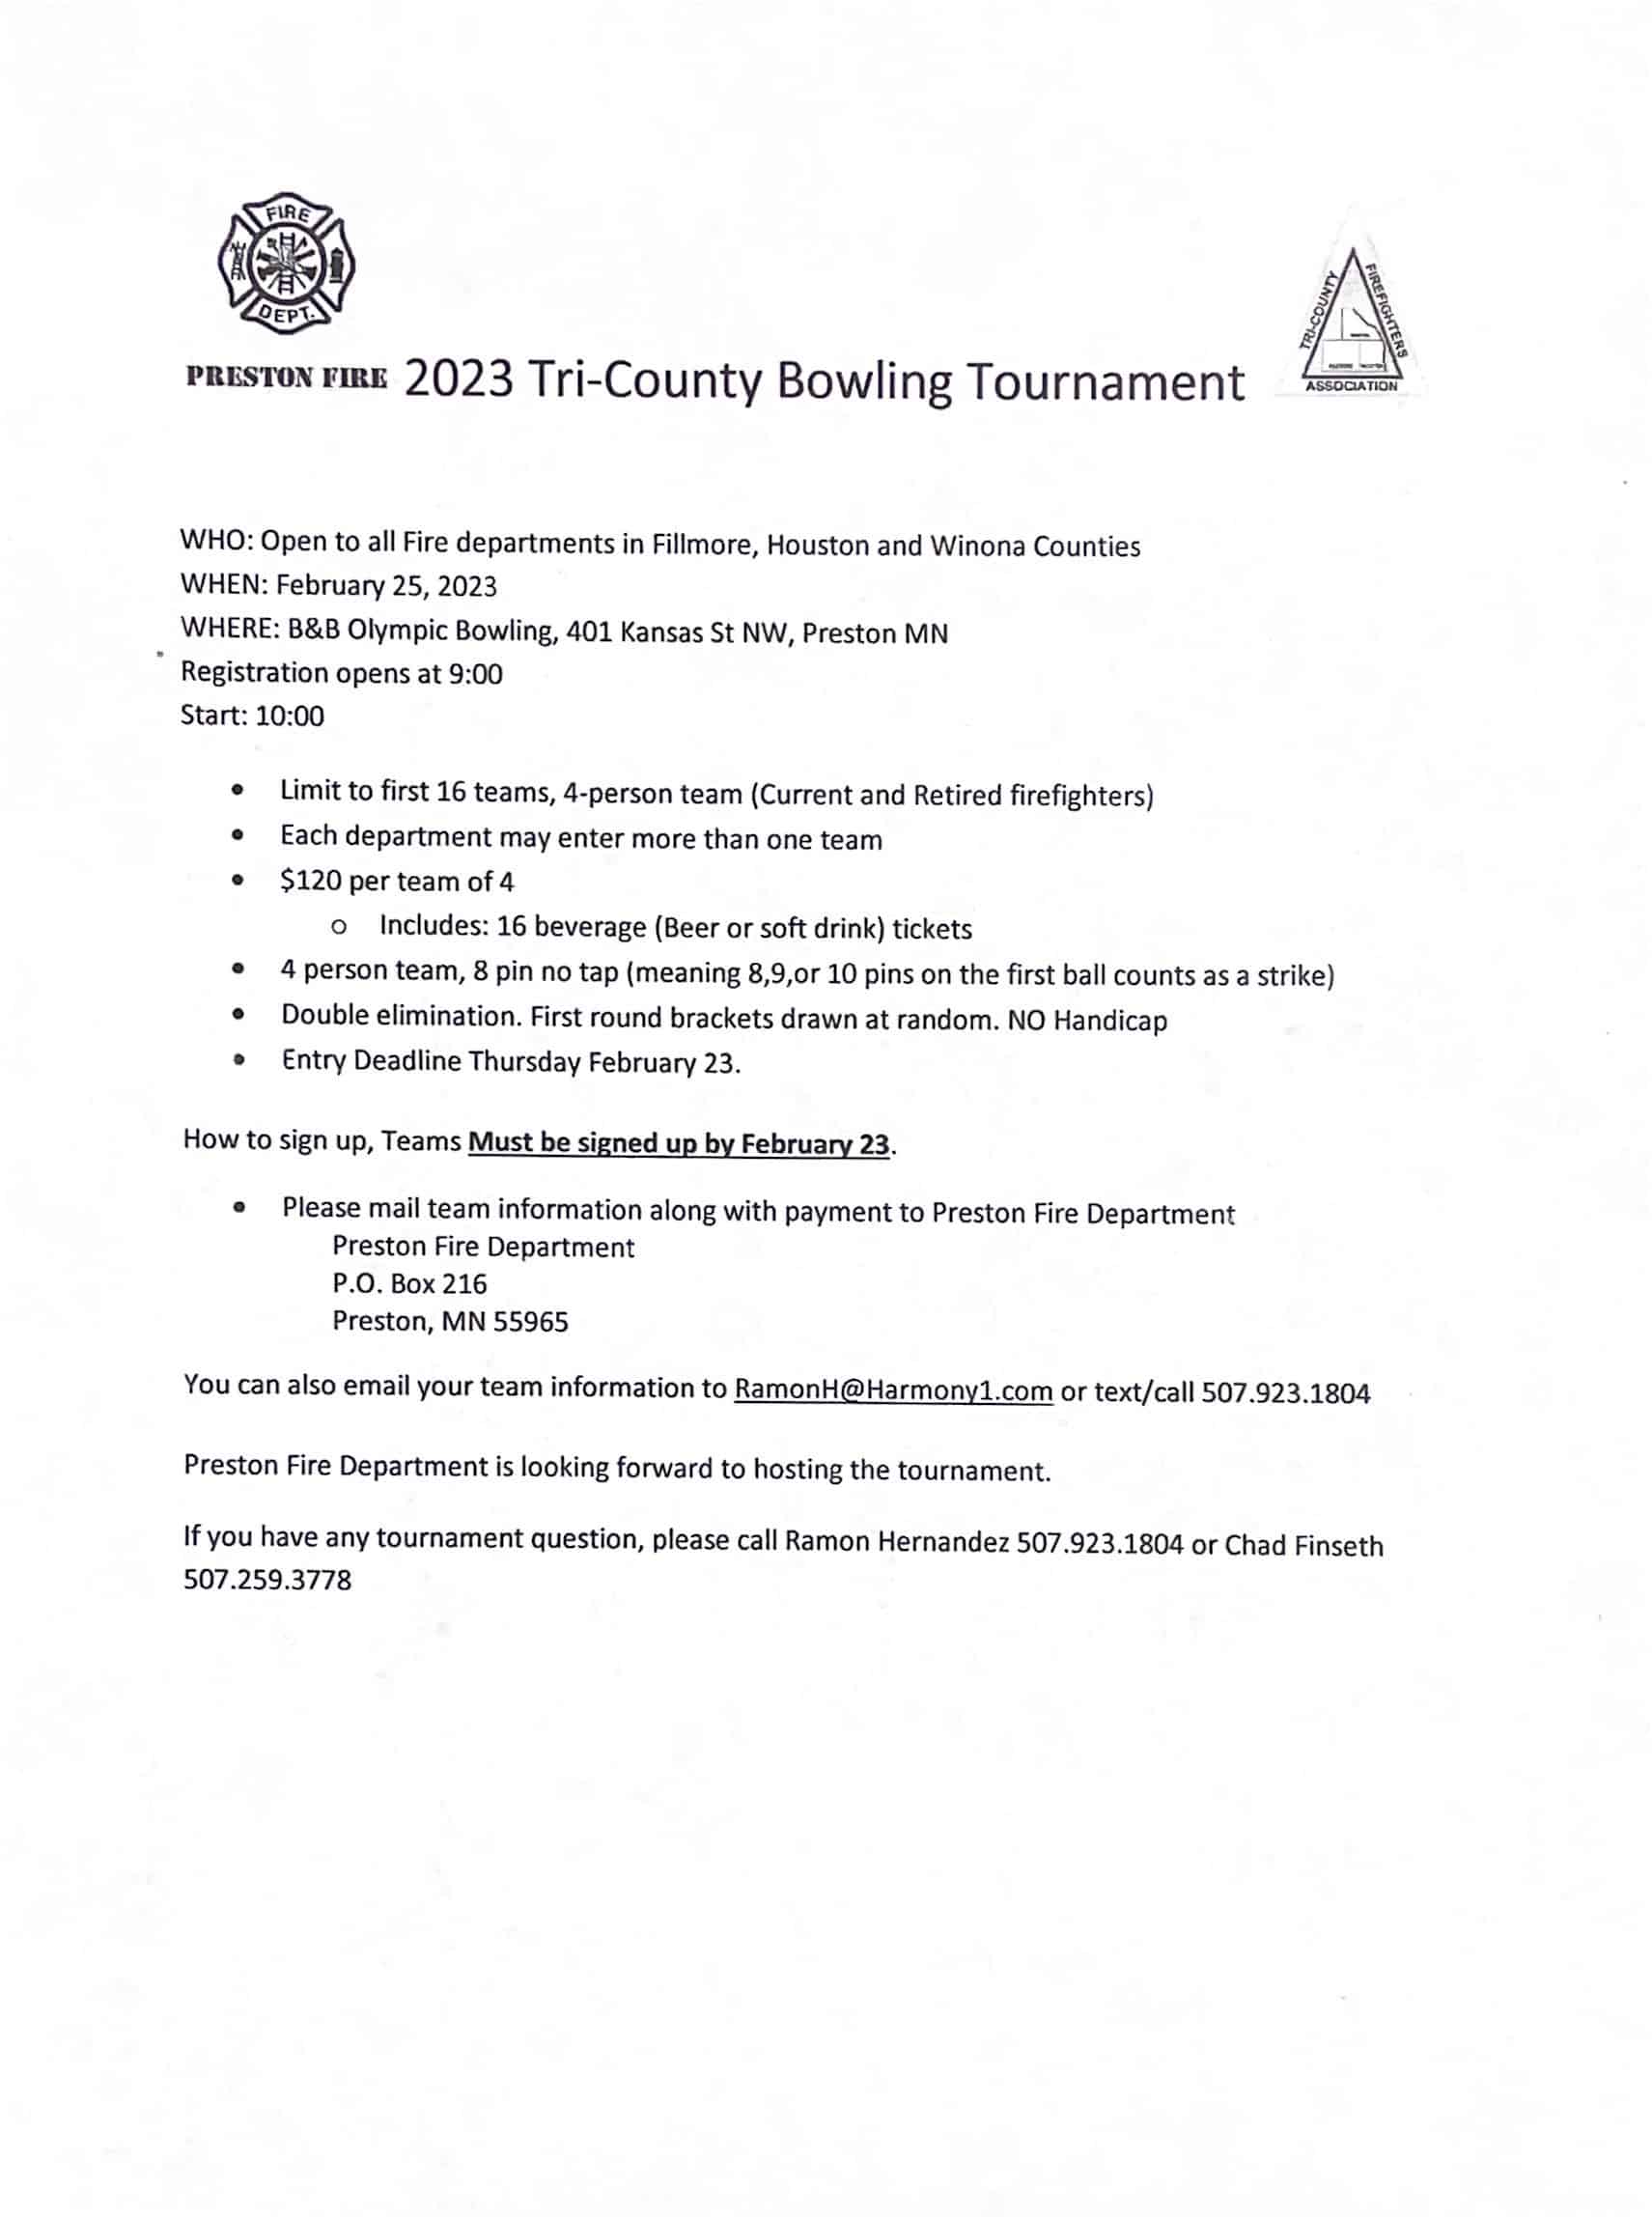 Tri-County Bowling